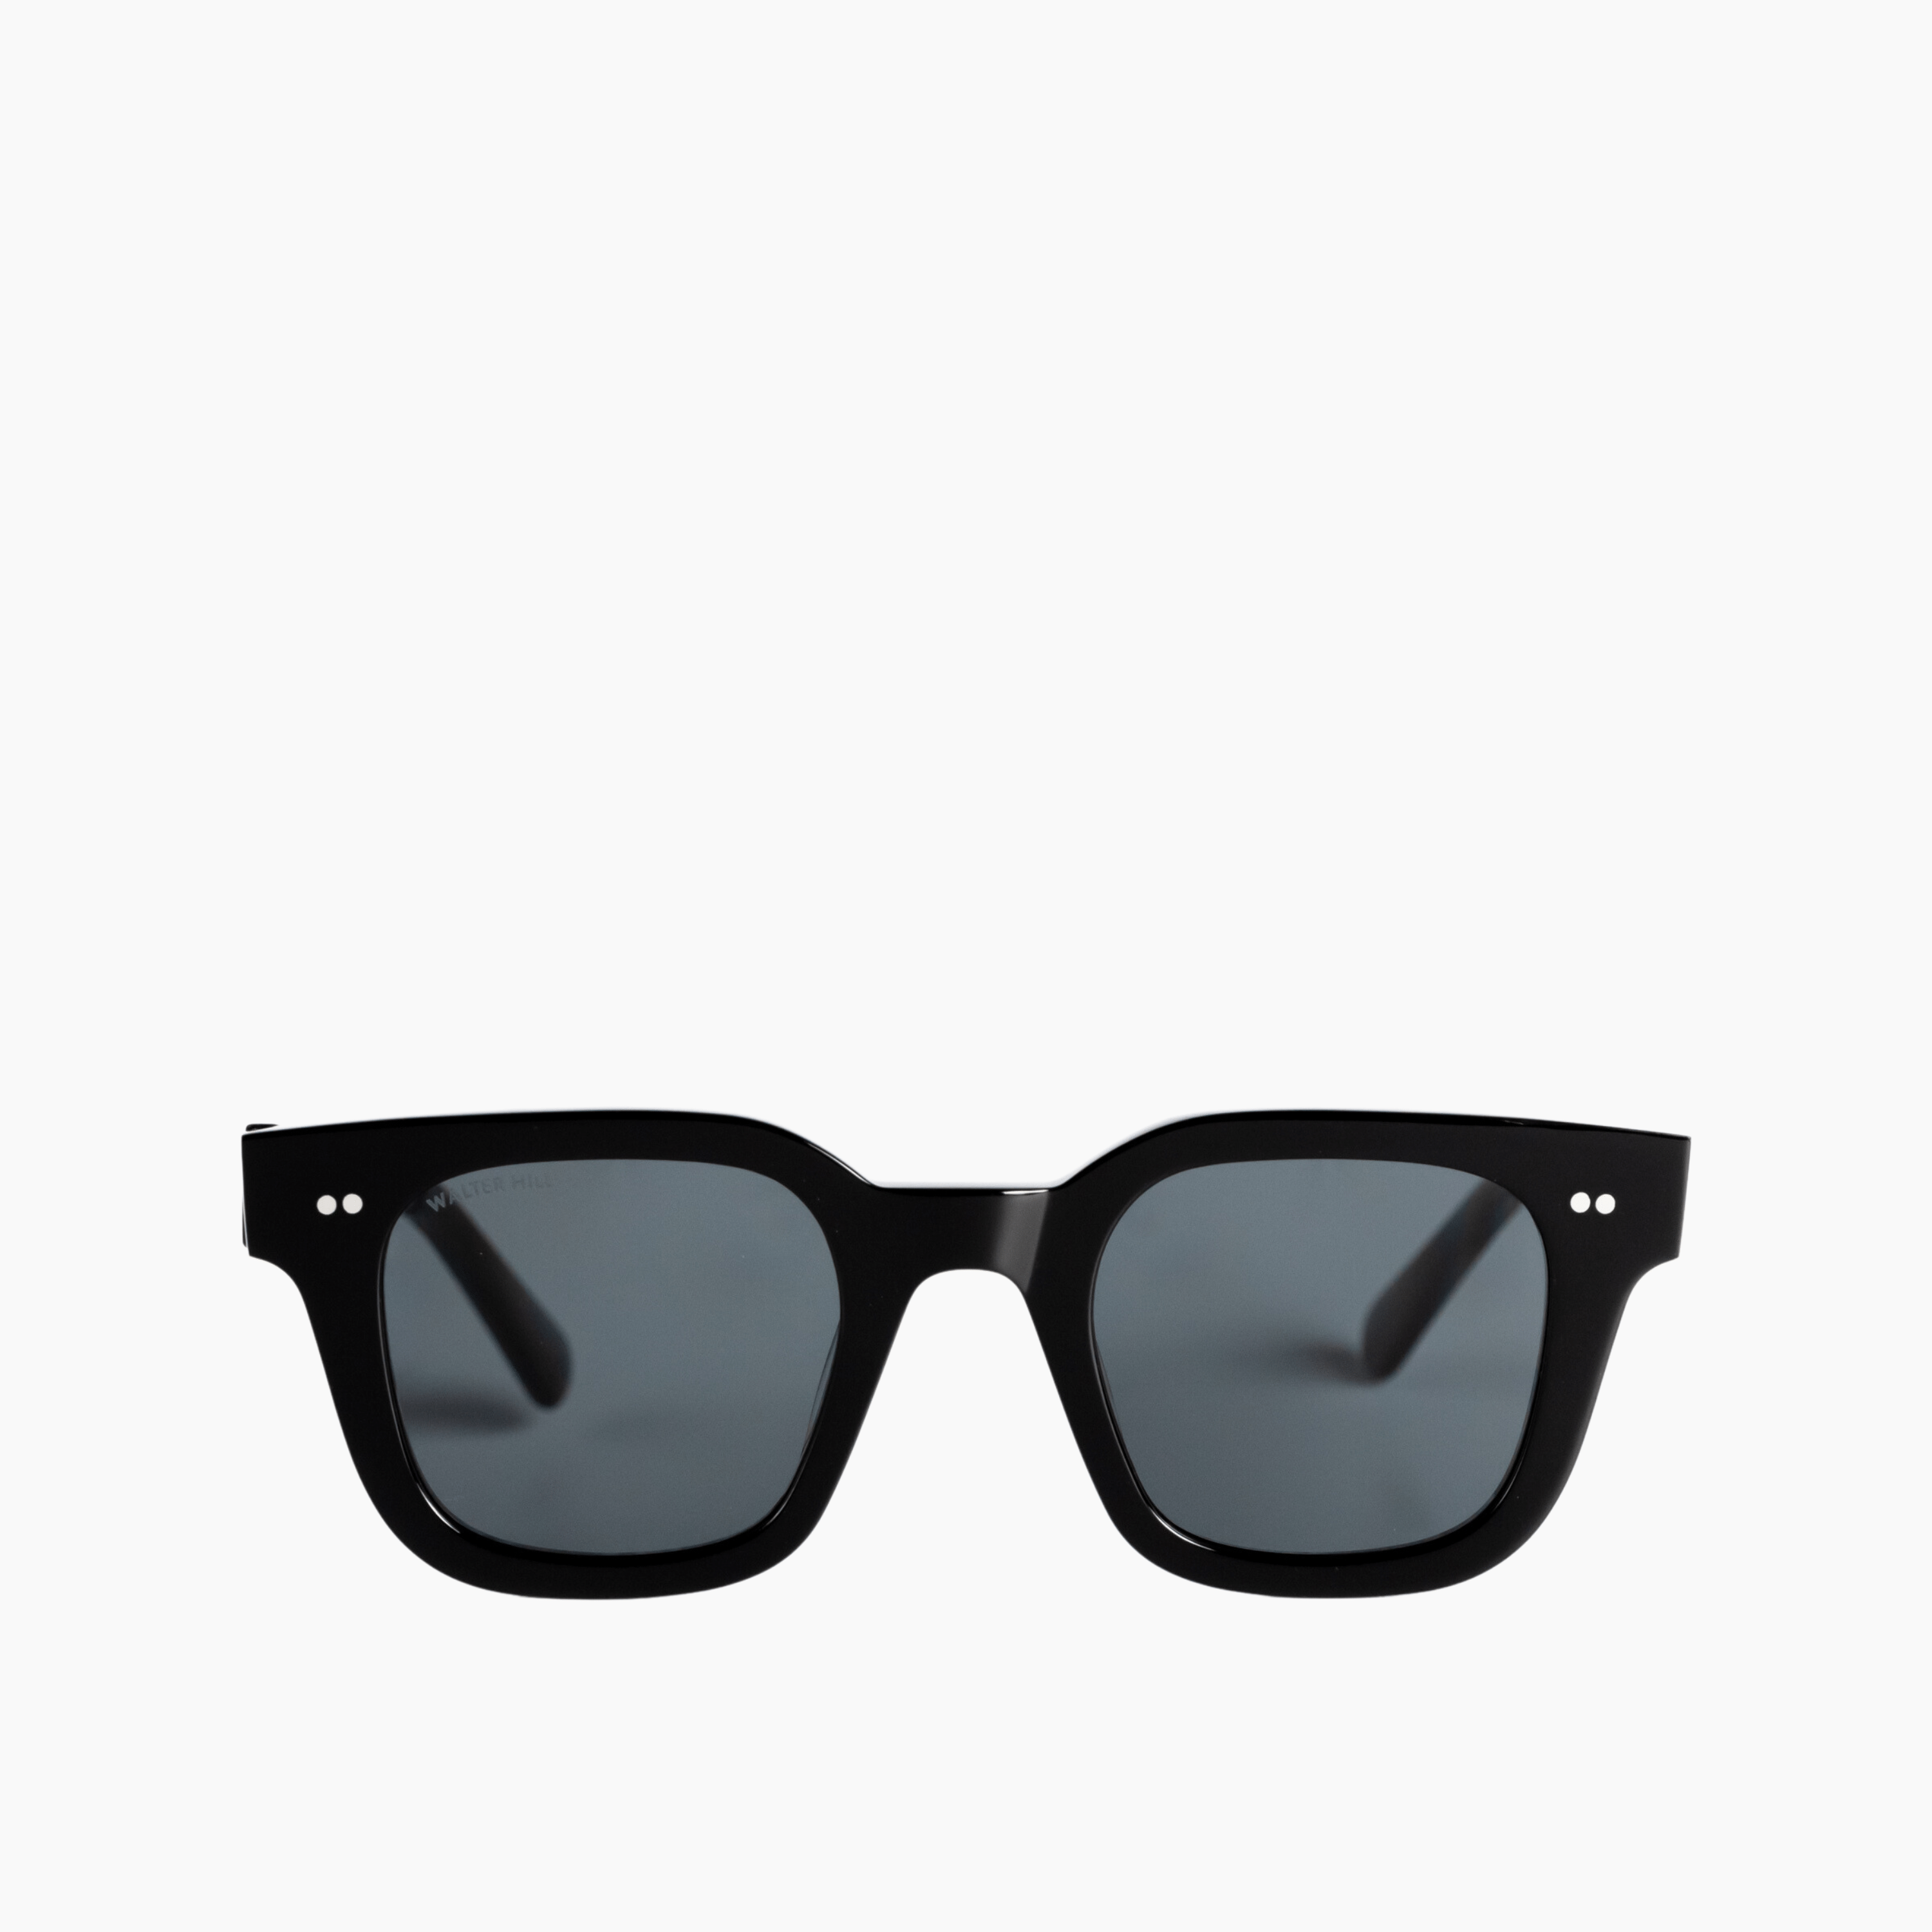 Walter Hill Sunglasses Black / Standard / Polarized Cat.3 XAVIER - Black